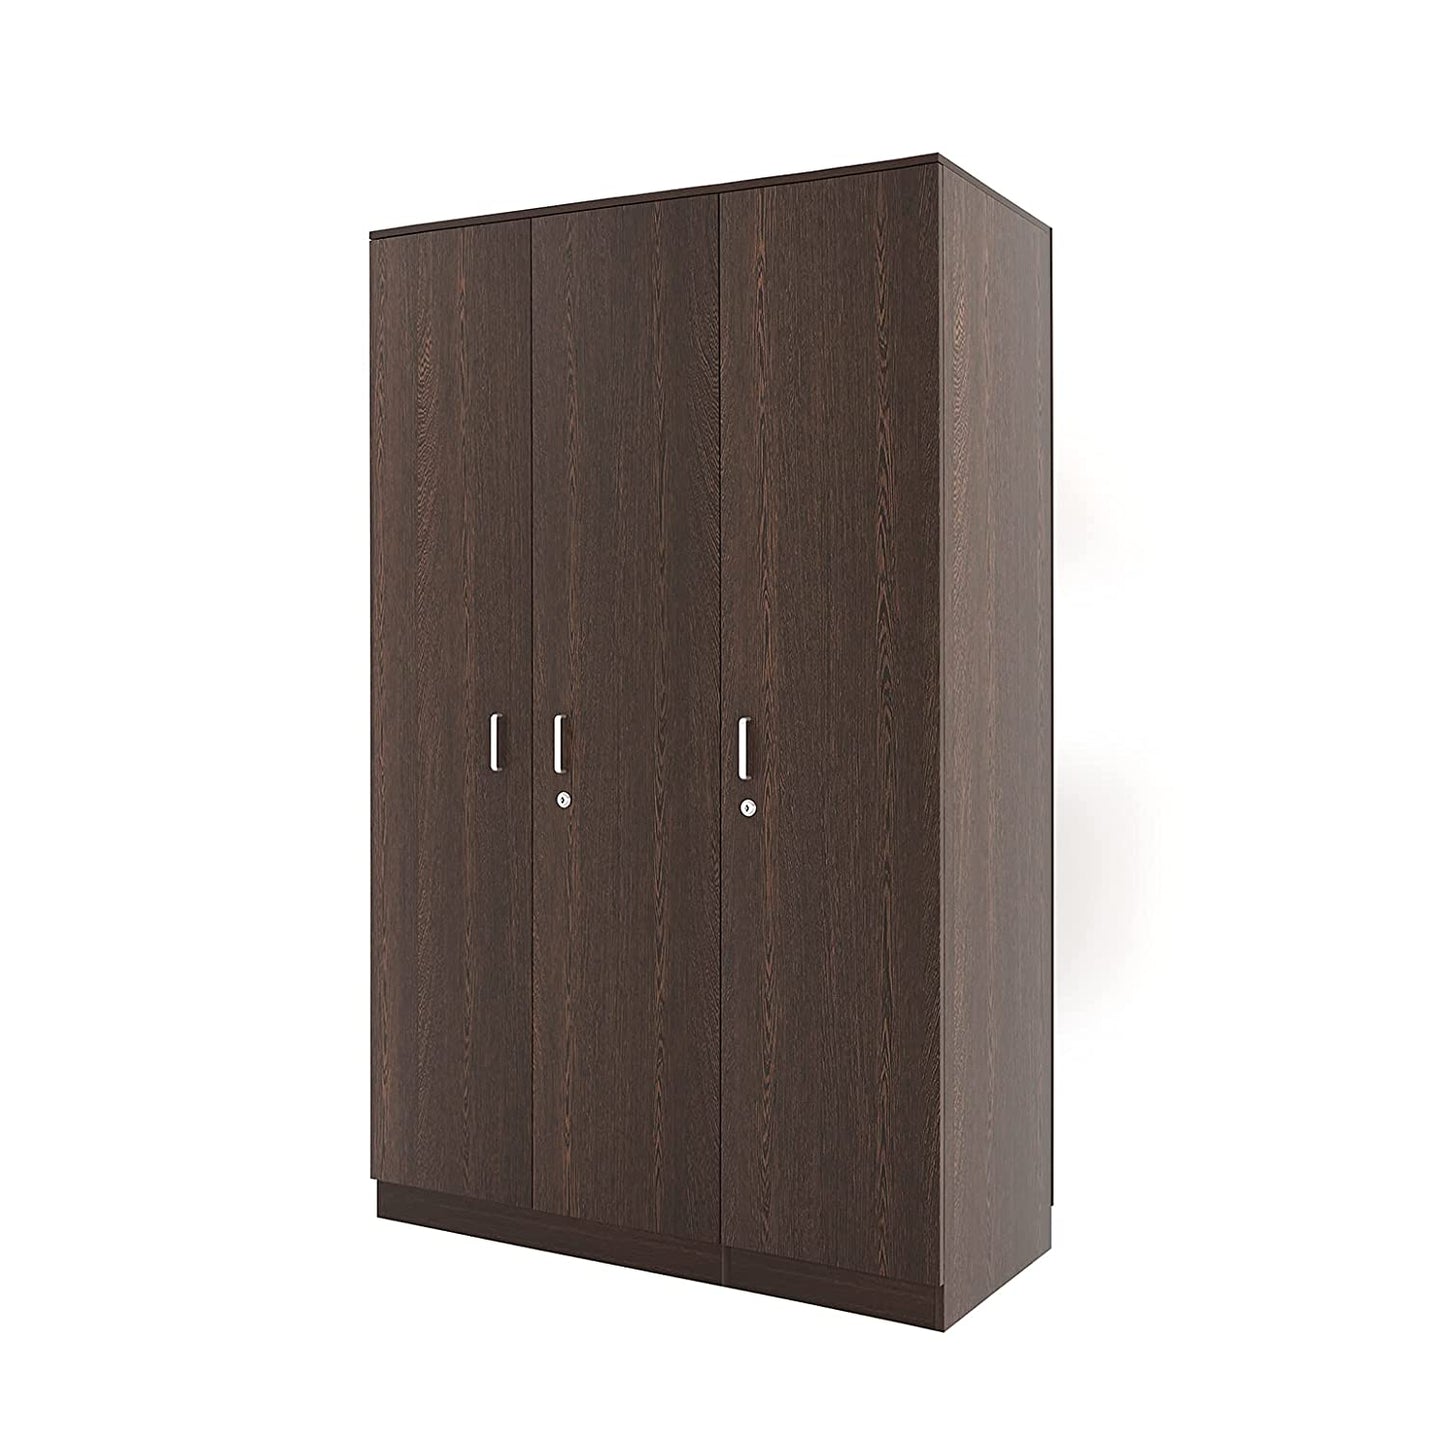 Wardrobe: Adrie Engineered Wood 3 Door Wardrobe With Drawer (Wenge)